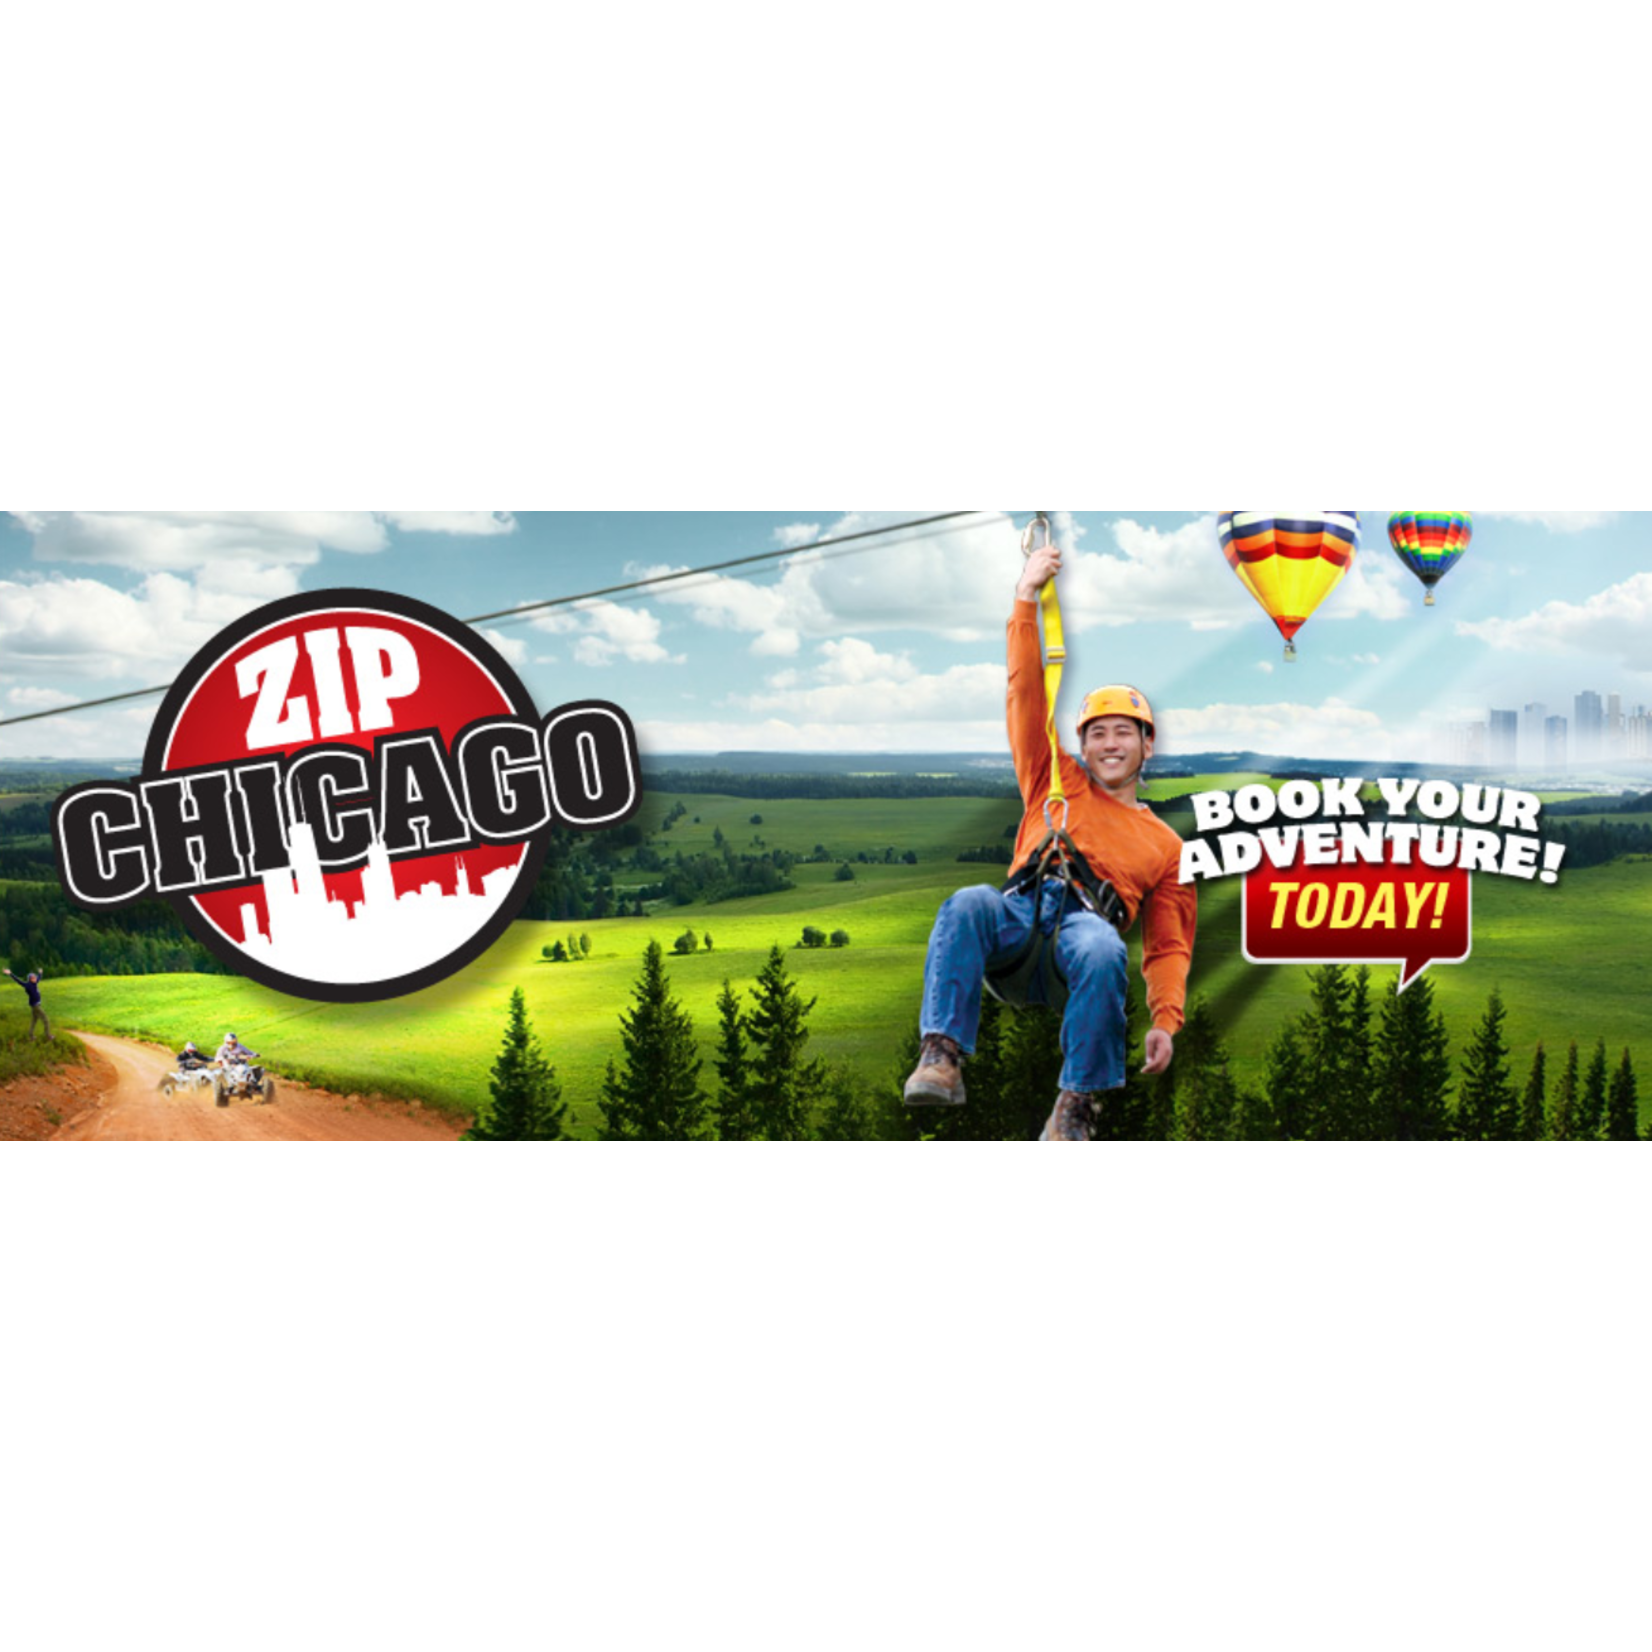 Zip Chicago-Marseilles Zip Chicago-Marseilles $178 Pair of Full Zipline Tours Admissions